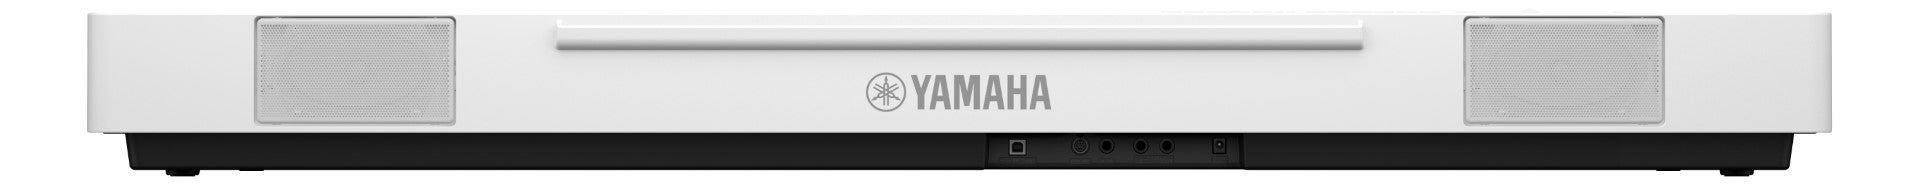 Yamaha P225 WH 88-Key Digital Piano - White